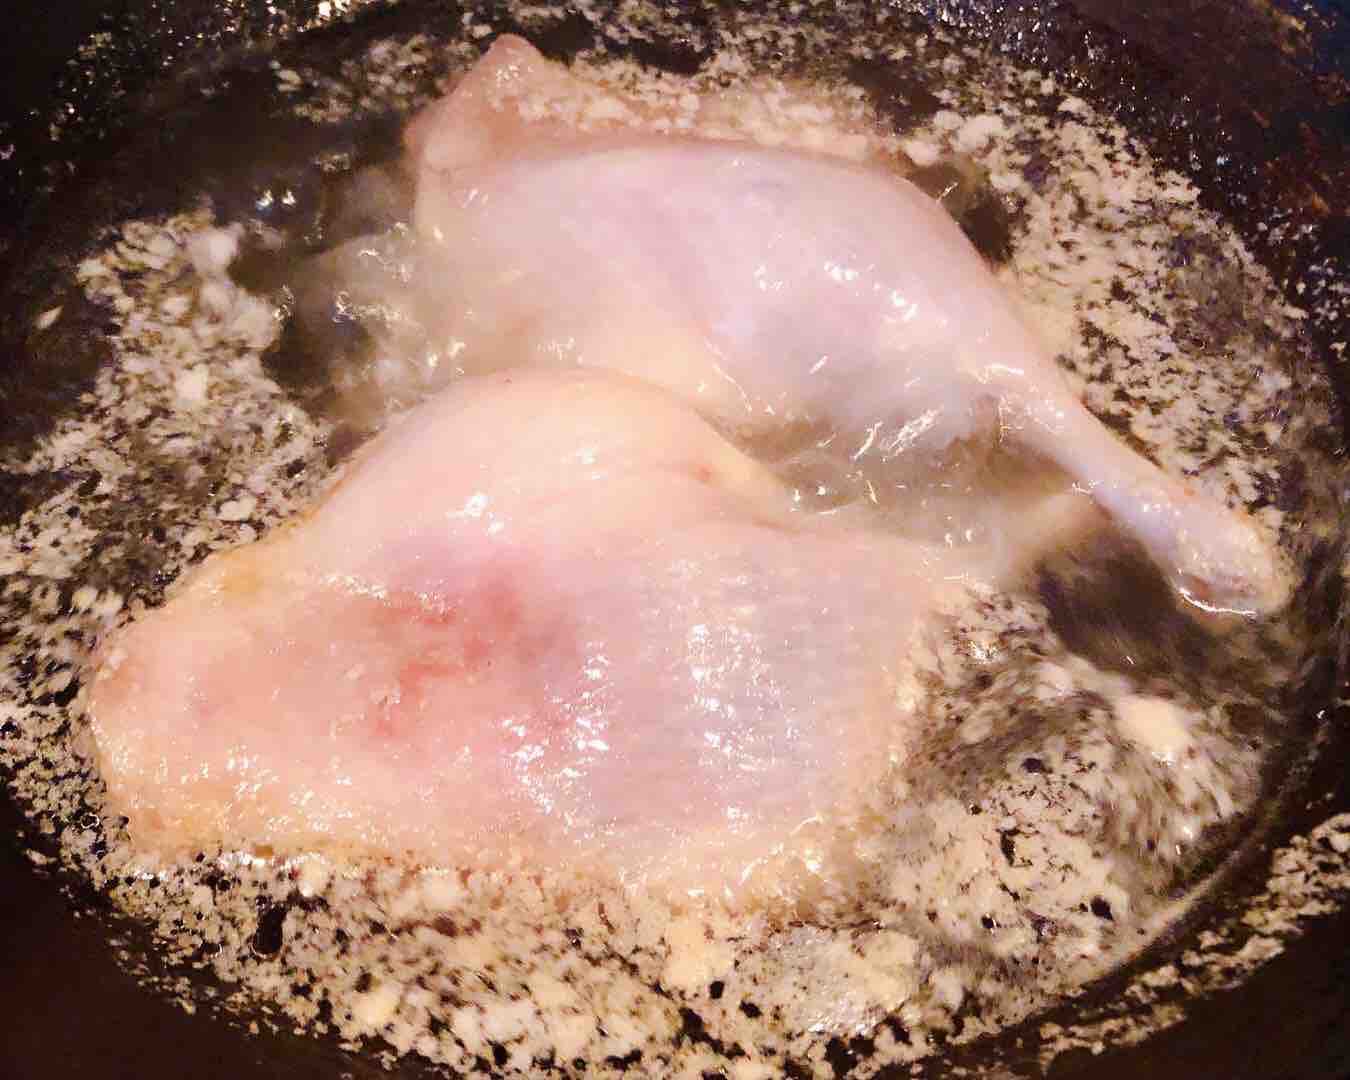 Roasted Duck Leg with Konjac recipe